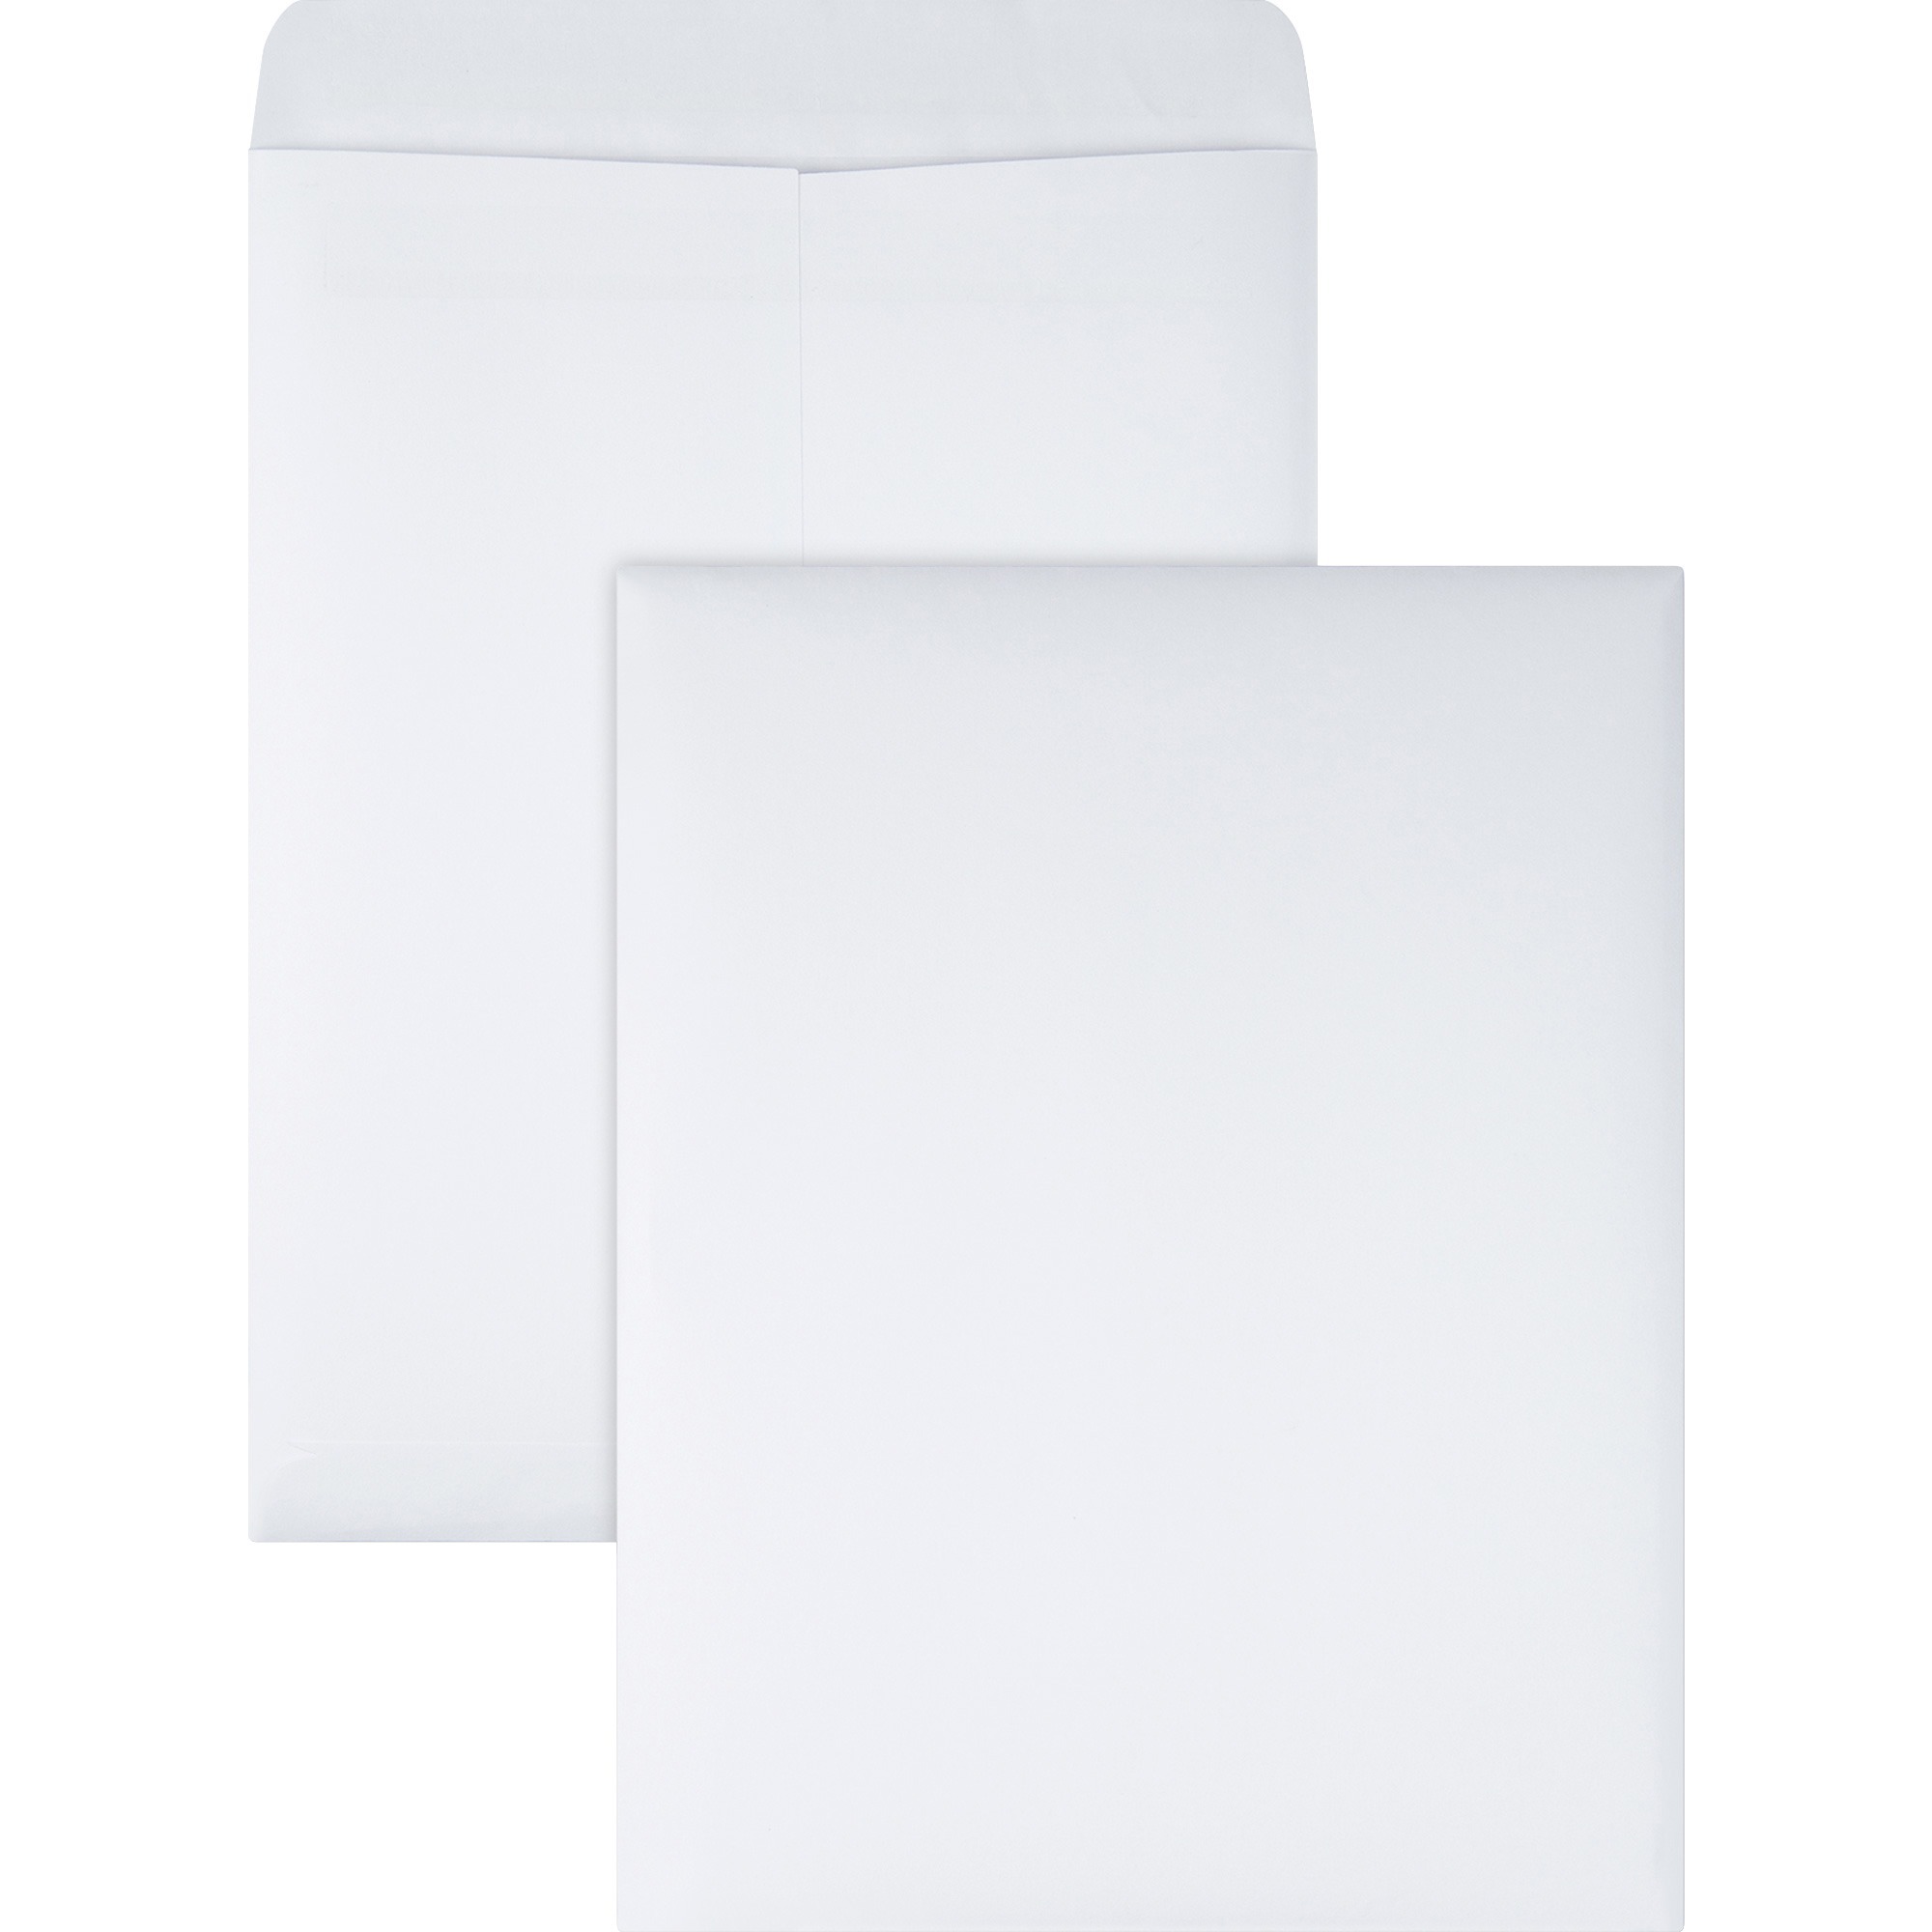 Quality Park Redi-Seal White Catalog Envelopes - Catalog - #12 1/2 - 9 1/2" Width x 12 1/2" Length - 28 lb - Self-sealing - 100 